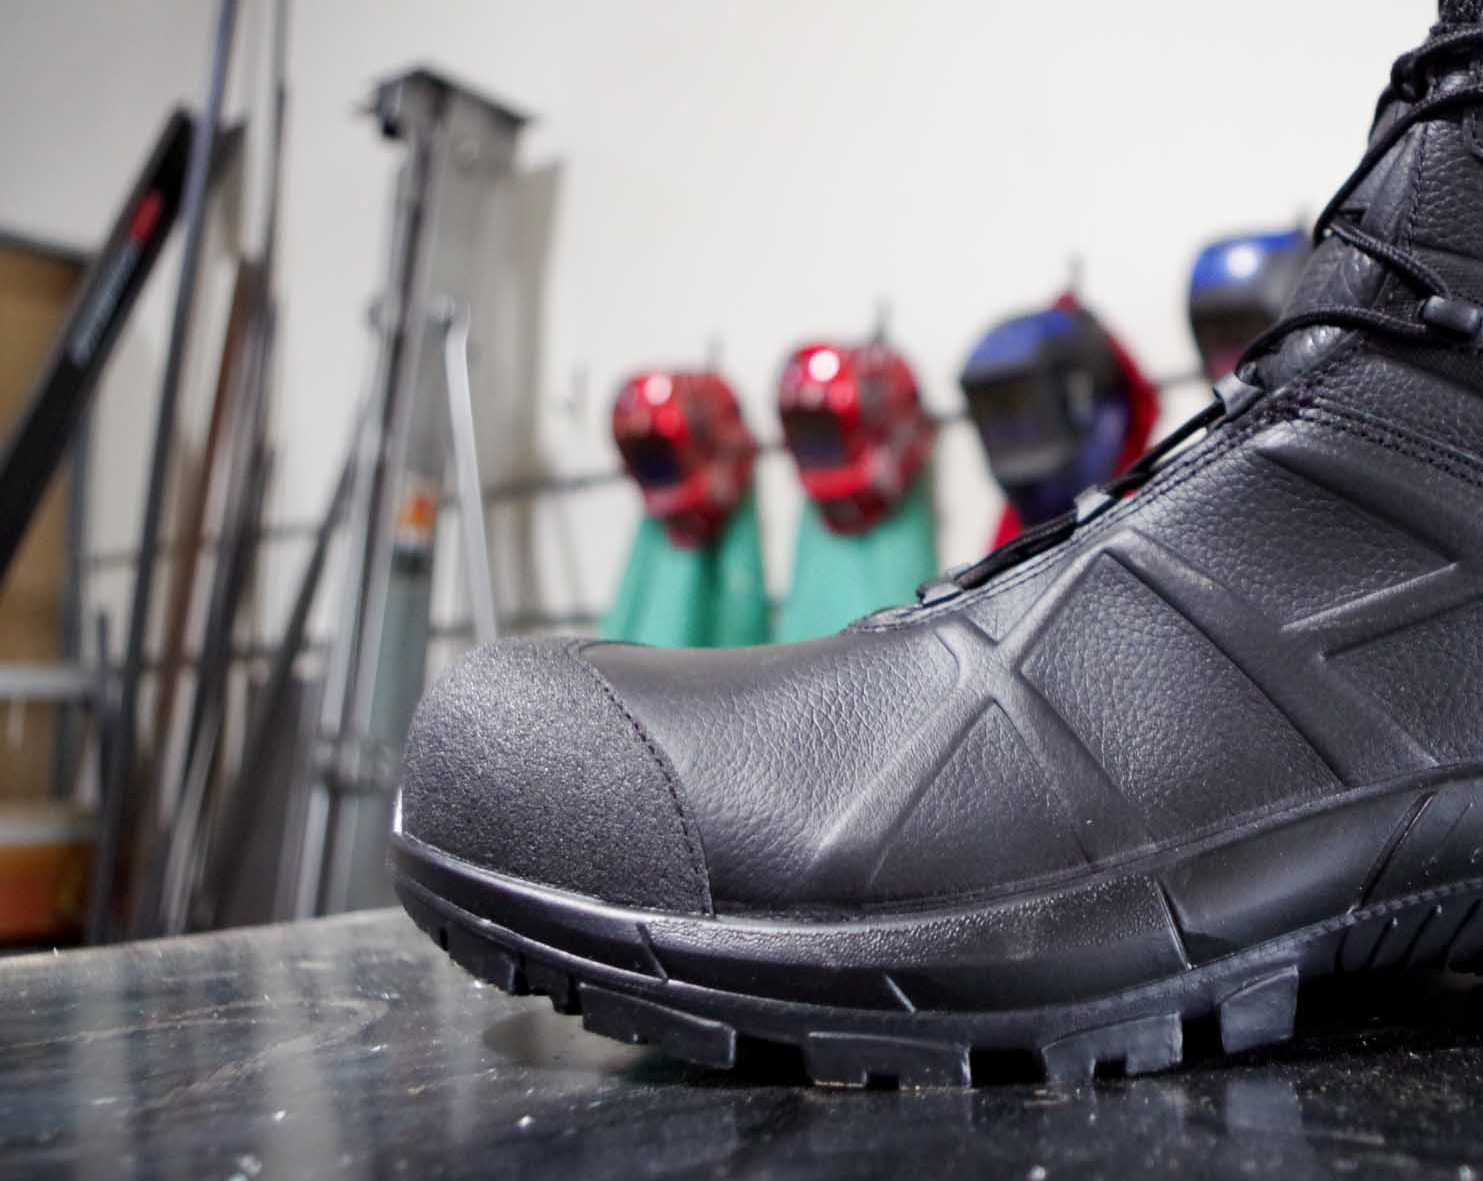 Slip Resistant Shoes, Safety Footwear